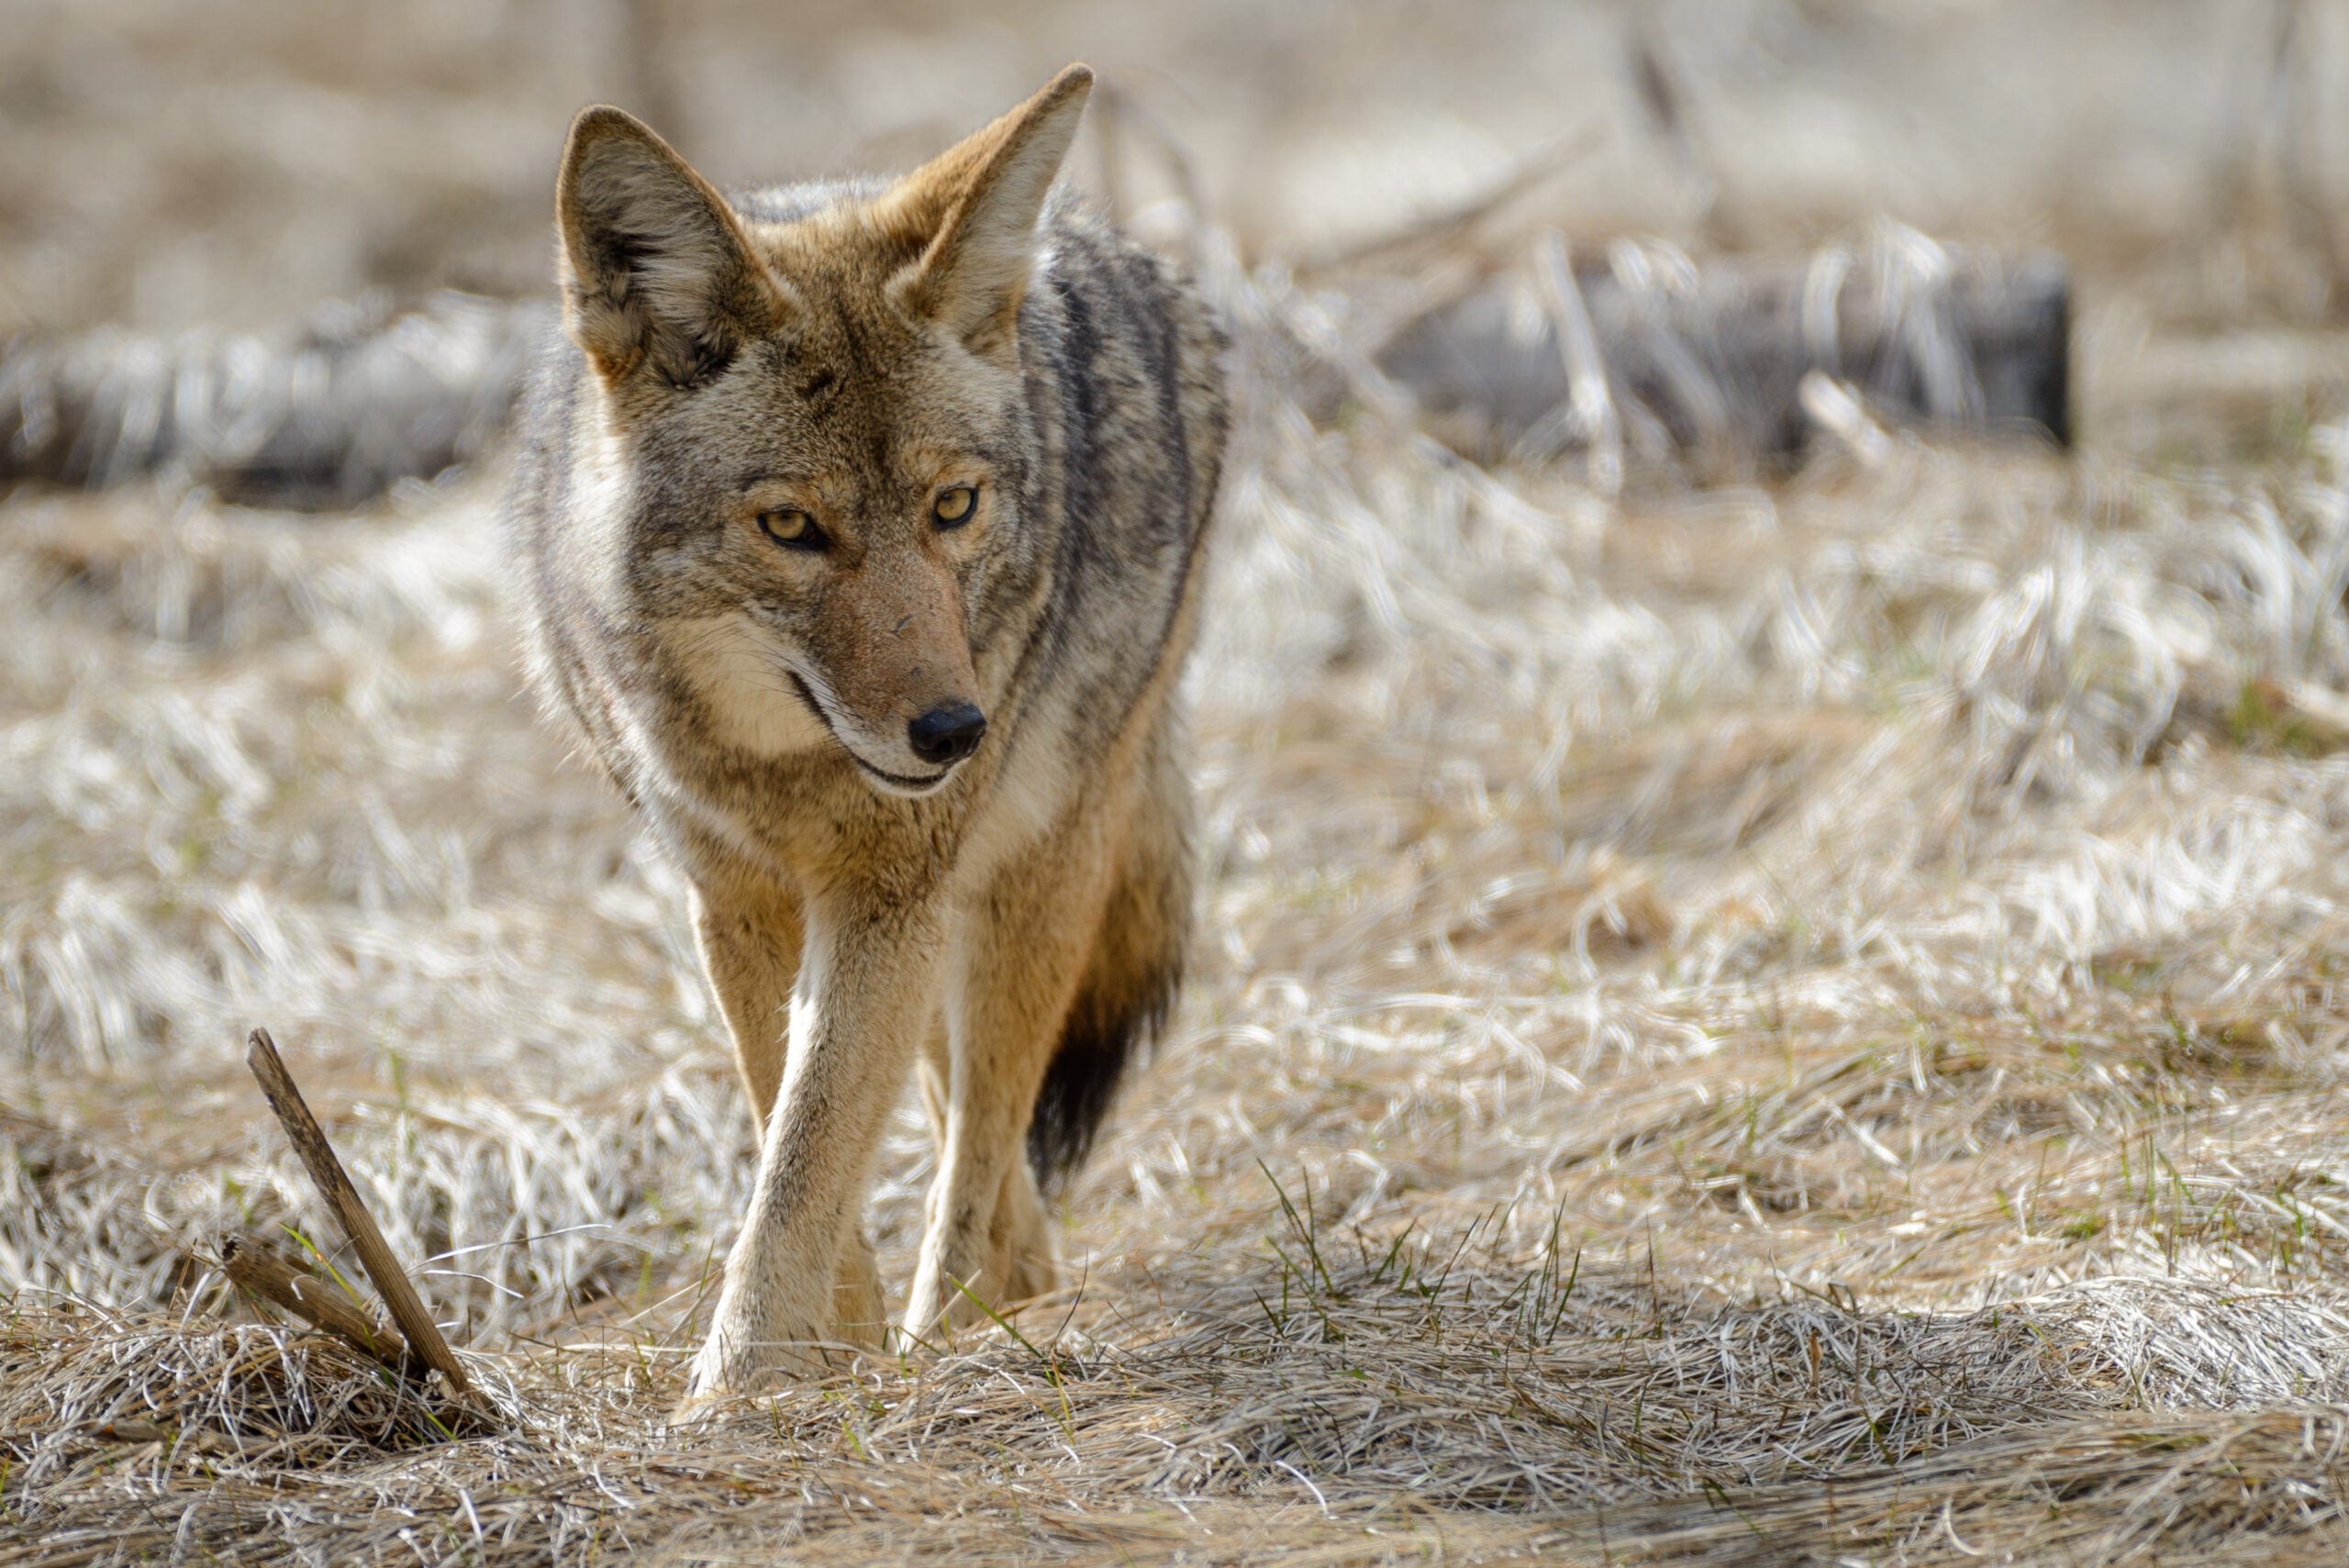 A coyote walk through a grassy brown field